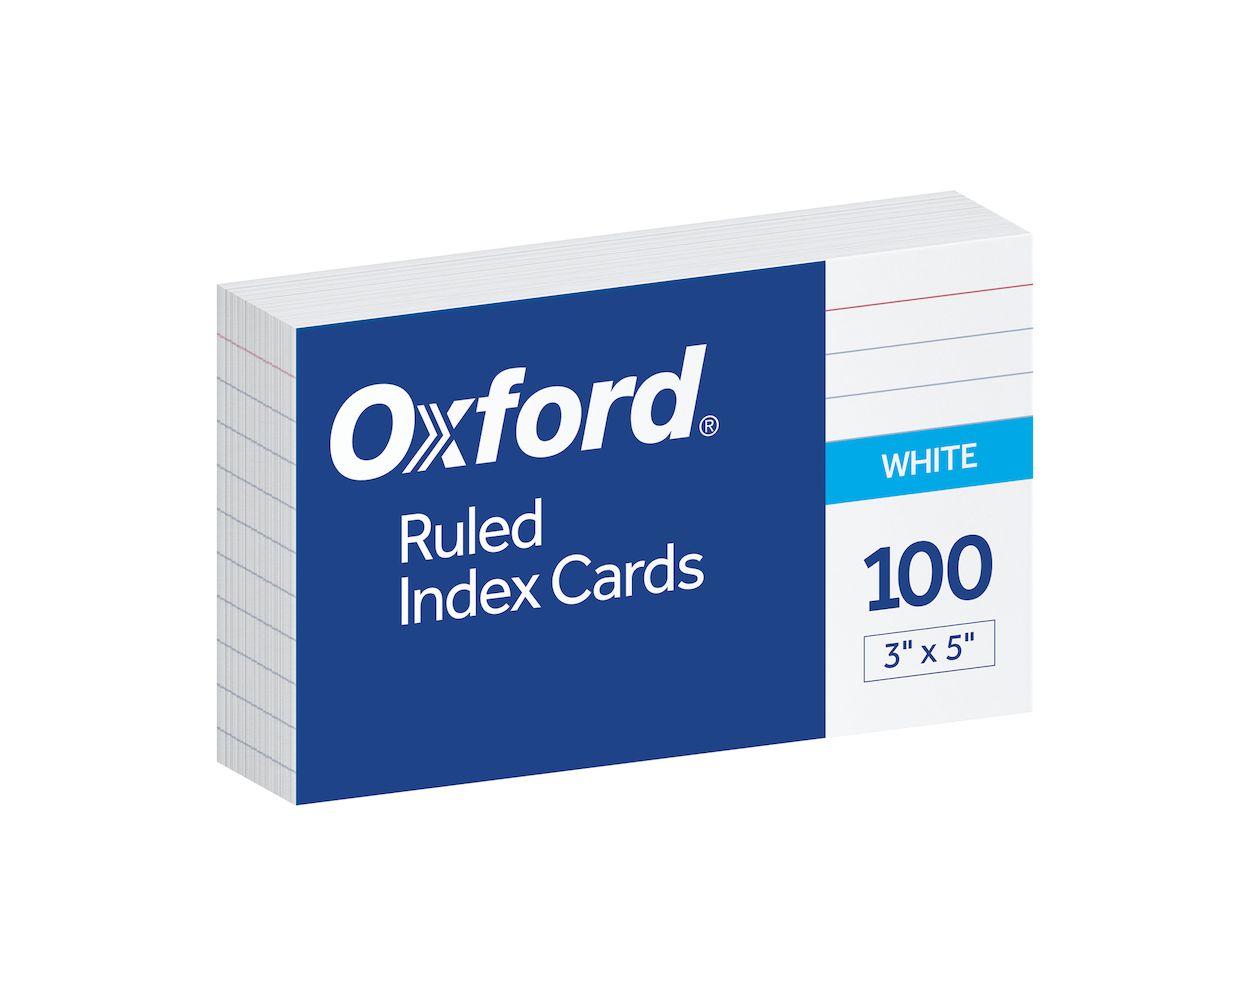 Index Cards & Index Card Storage